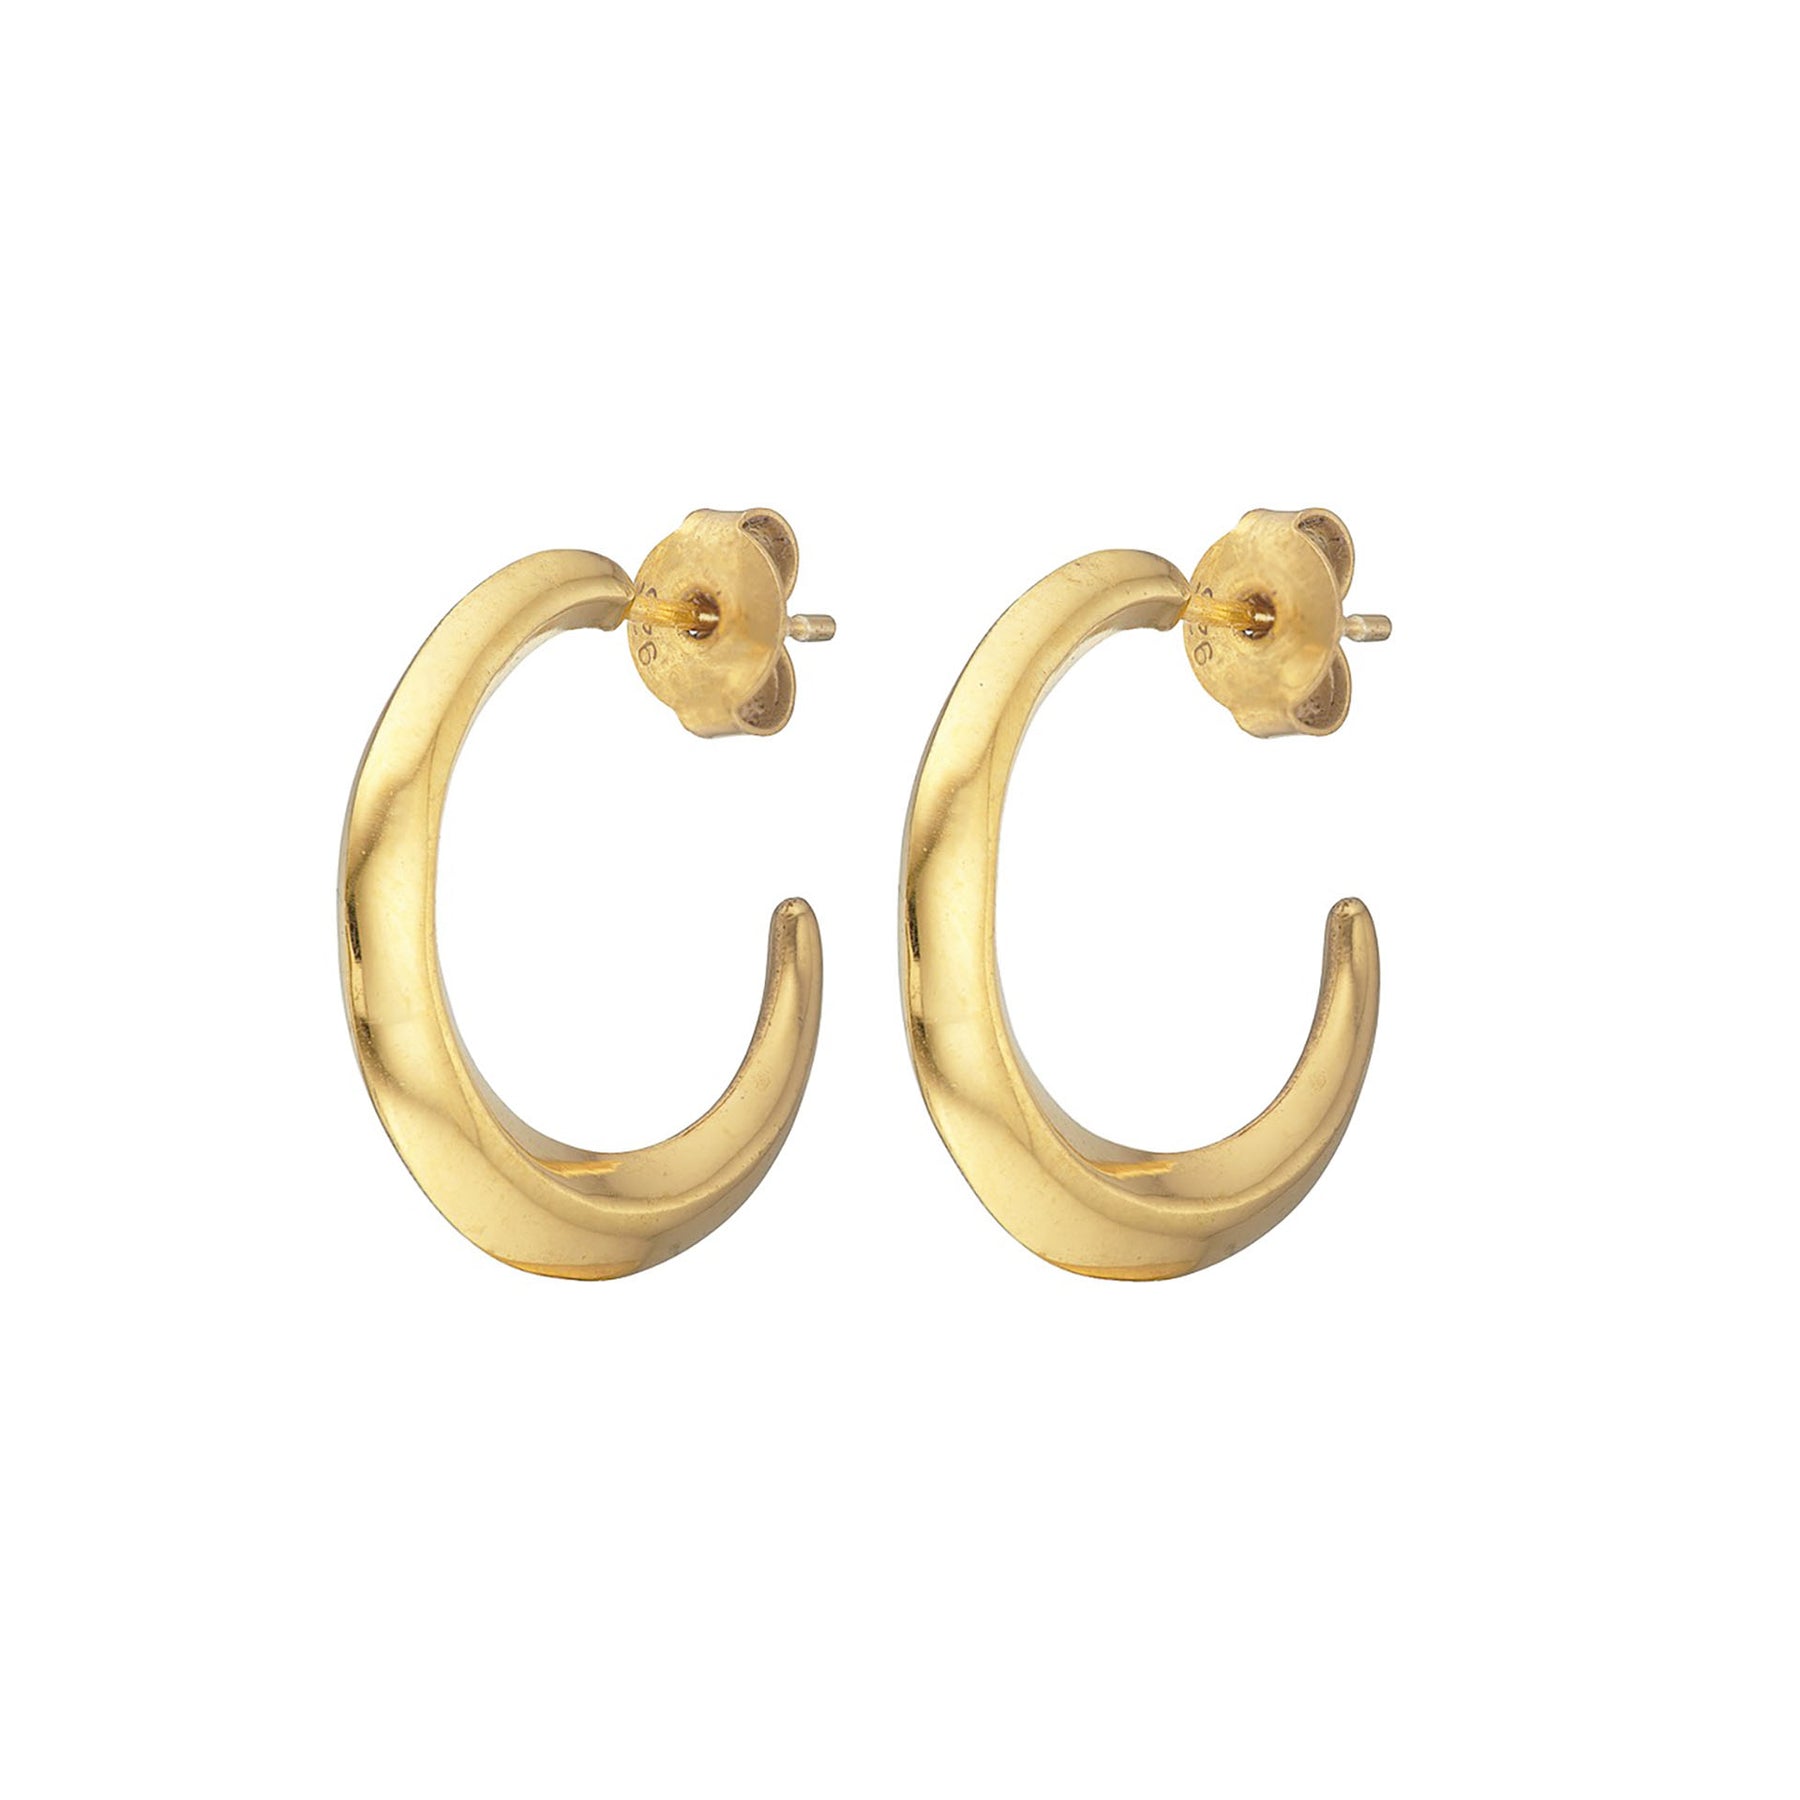 Gold Vermeil Torc Hoop Earrings  Jewellery Online Ireland  Loinnir   LOINNIR JEWELLERY